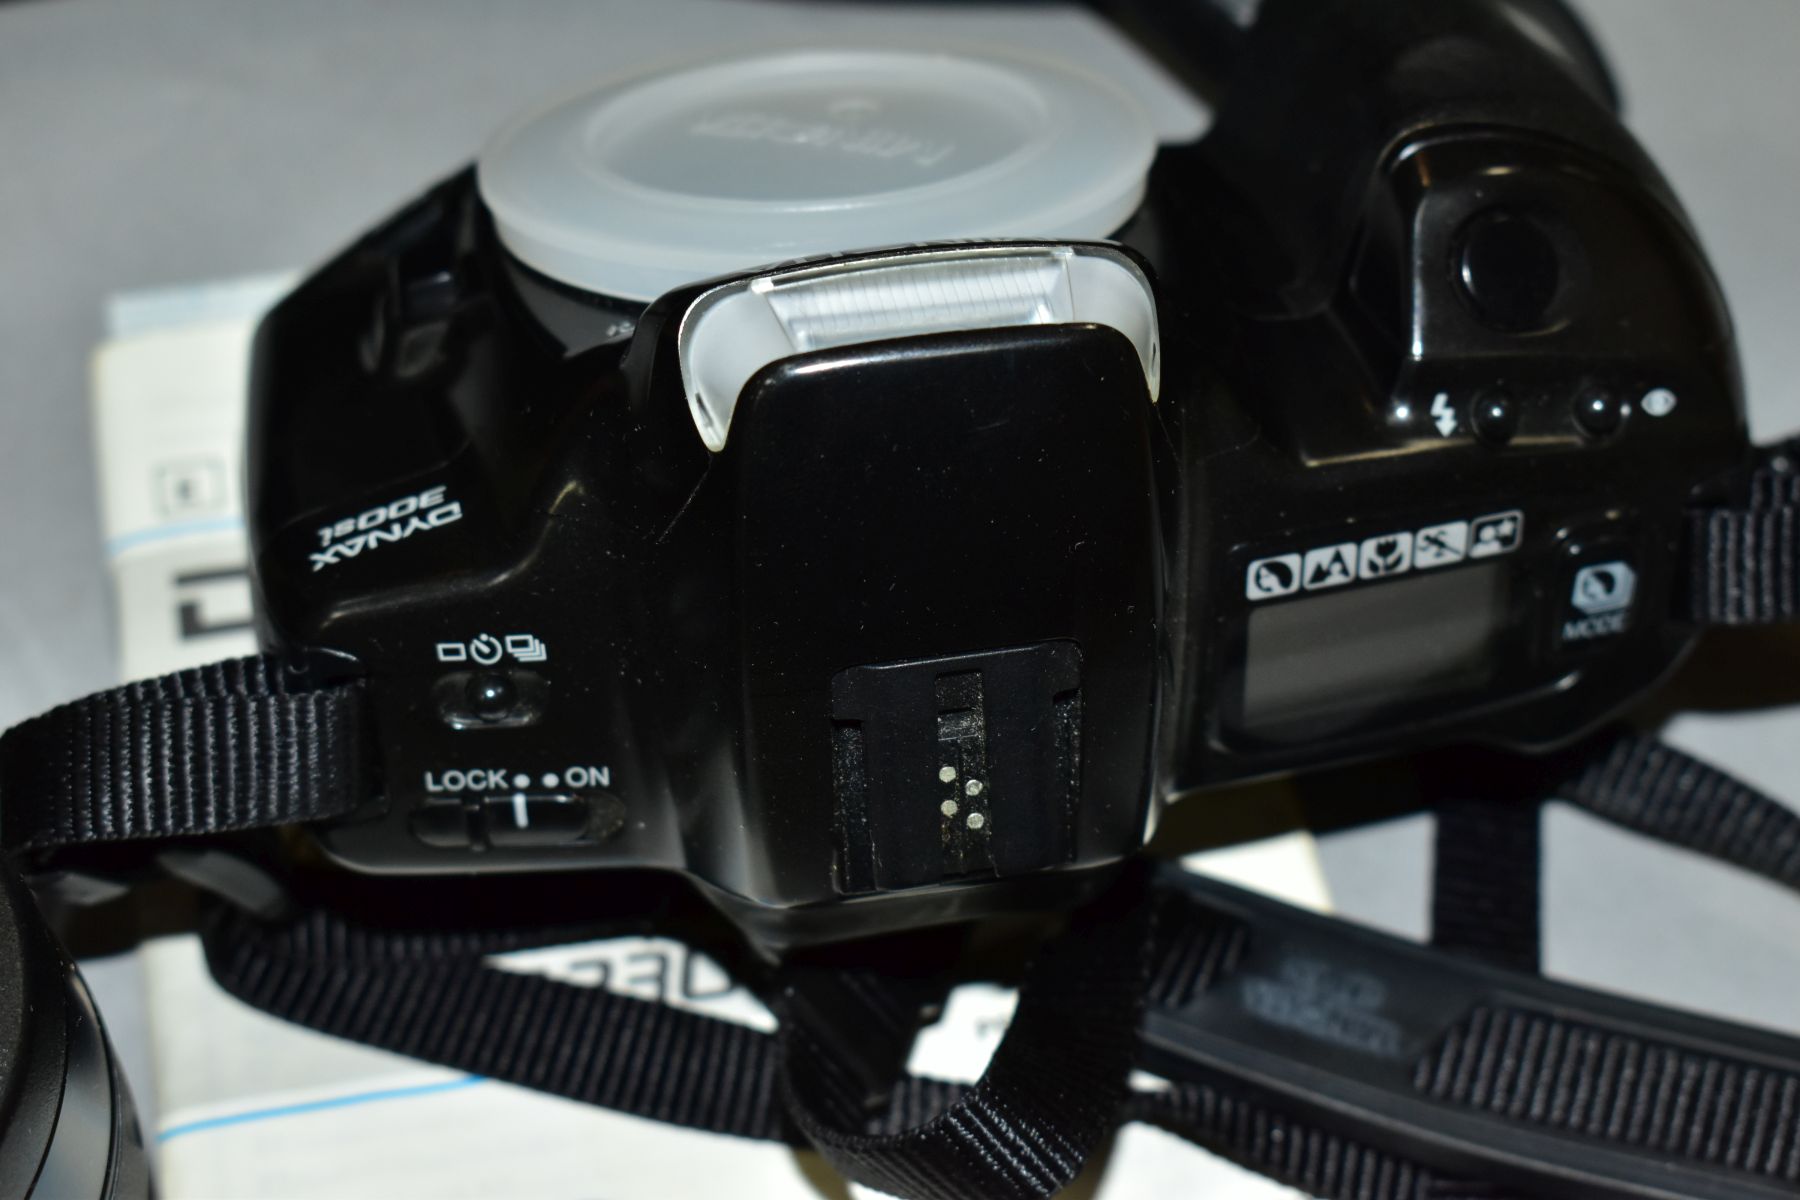 PHOTOGRAPHIC EQUIPMENT comprising a Minolta Dynax 300SI camera body, Minolta 35-70 zoom lens, - Image 5 of 9